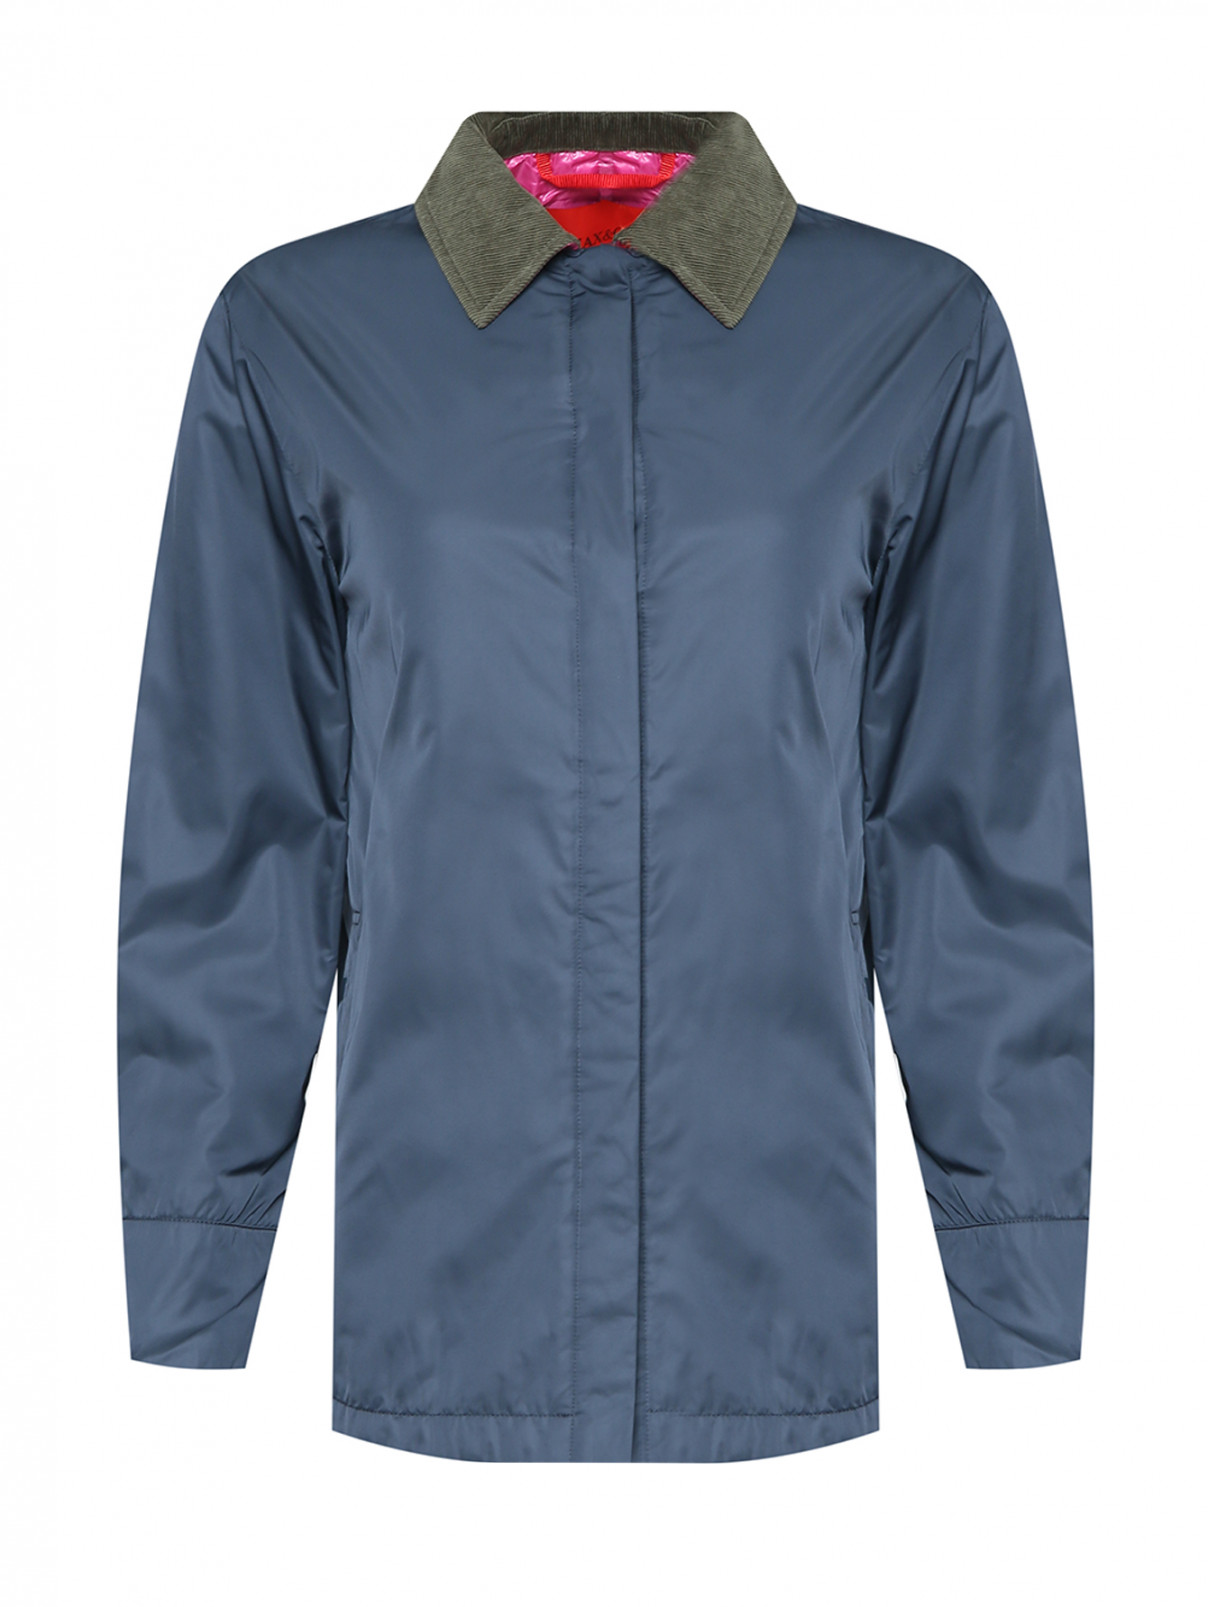 Куртка-рубашка с карманами Max&Co  –  Общий вид  – Цвет:  Синий